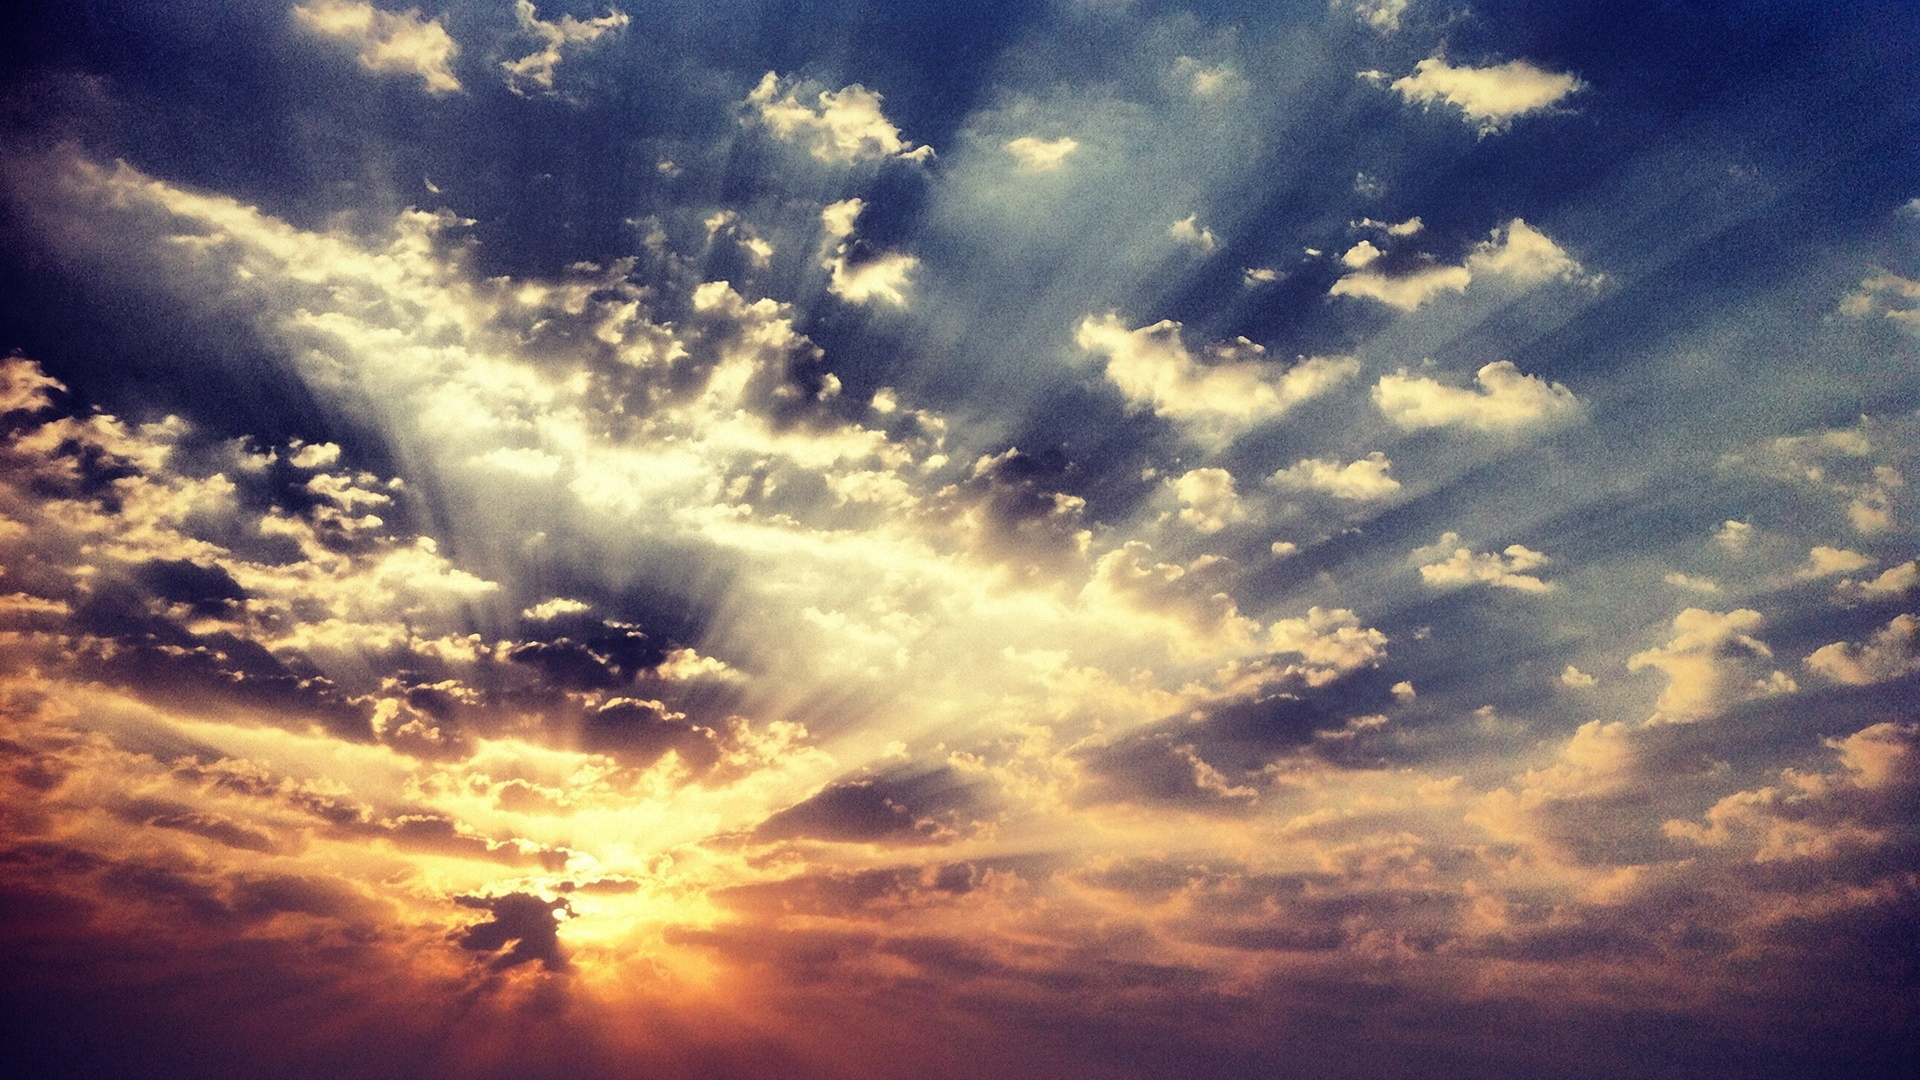 HD desktop wallpaper: Sky, Earth, Cloud, Sunbeam download free picture  #569981